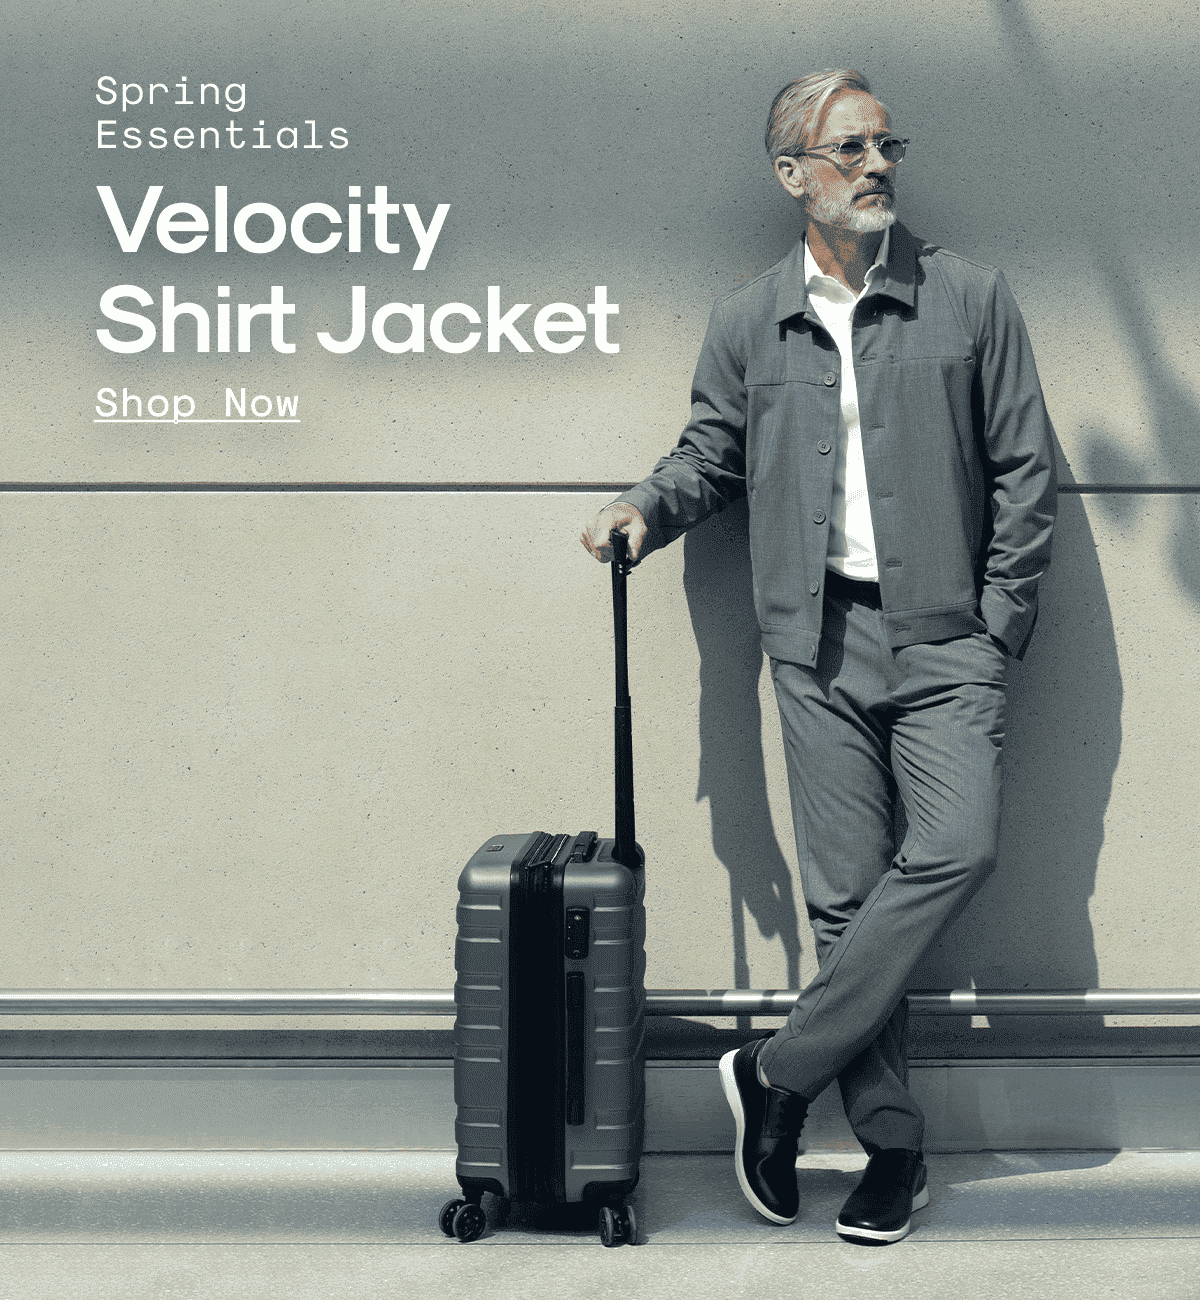 Spring Essentials: Velocity Shirt Jacket